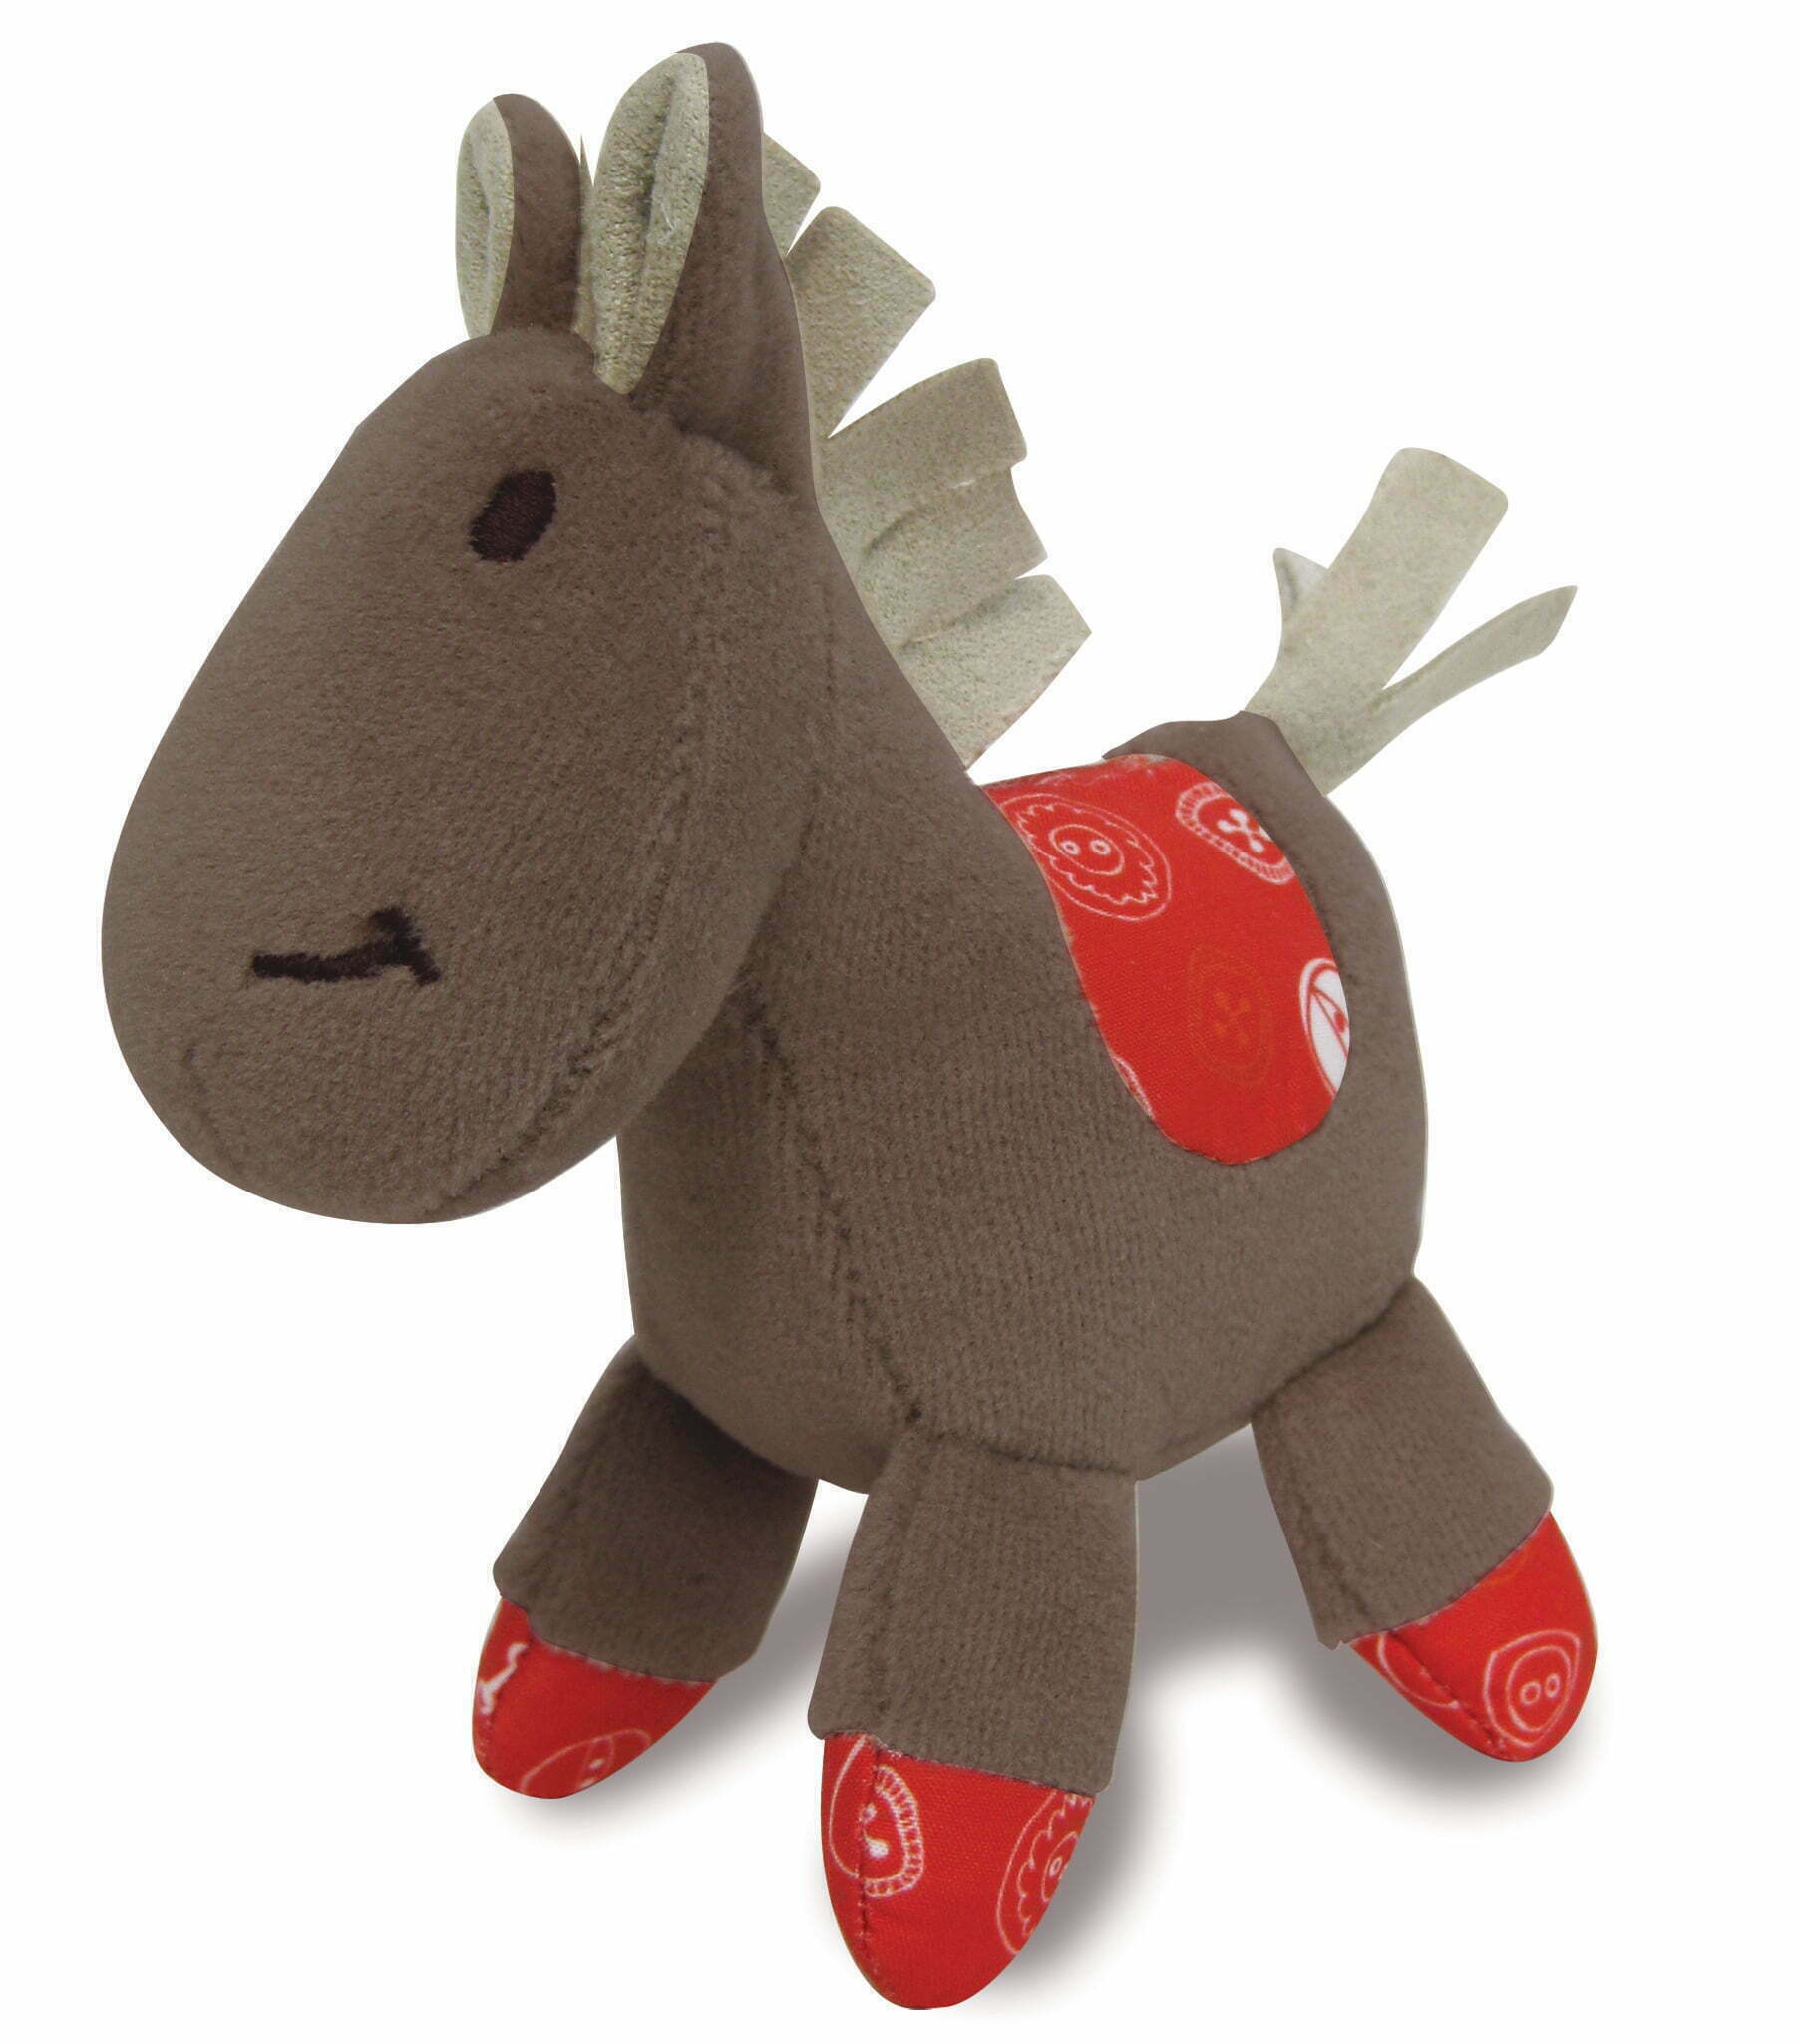 Soft & cute Little Crumb toy horse 